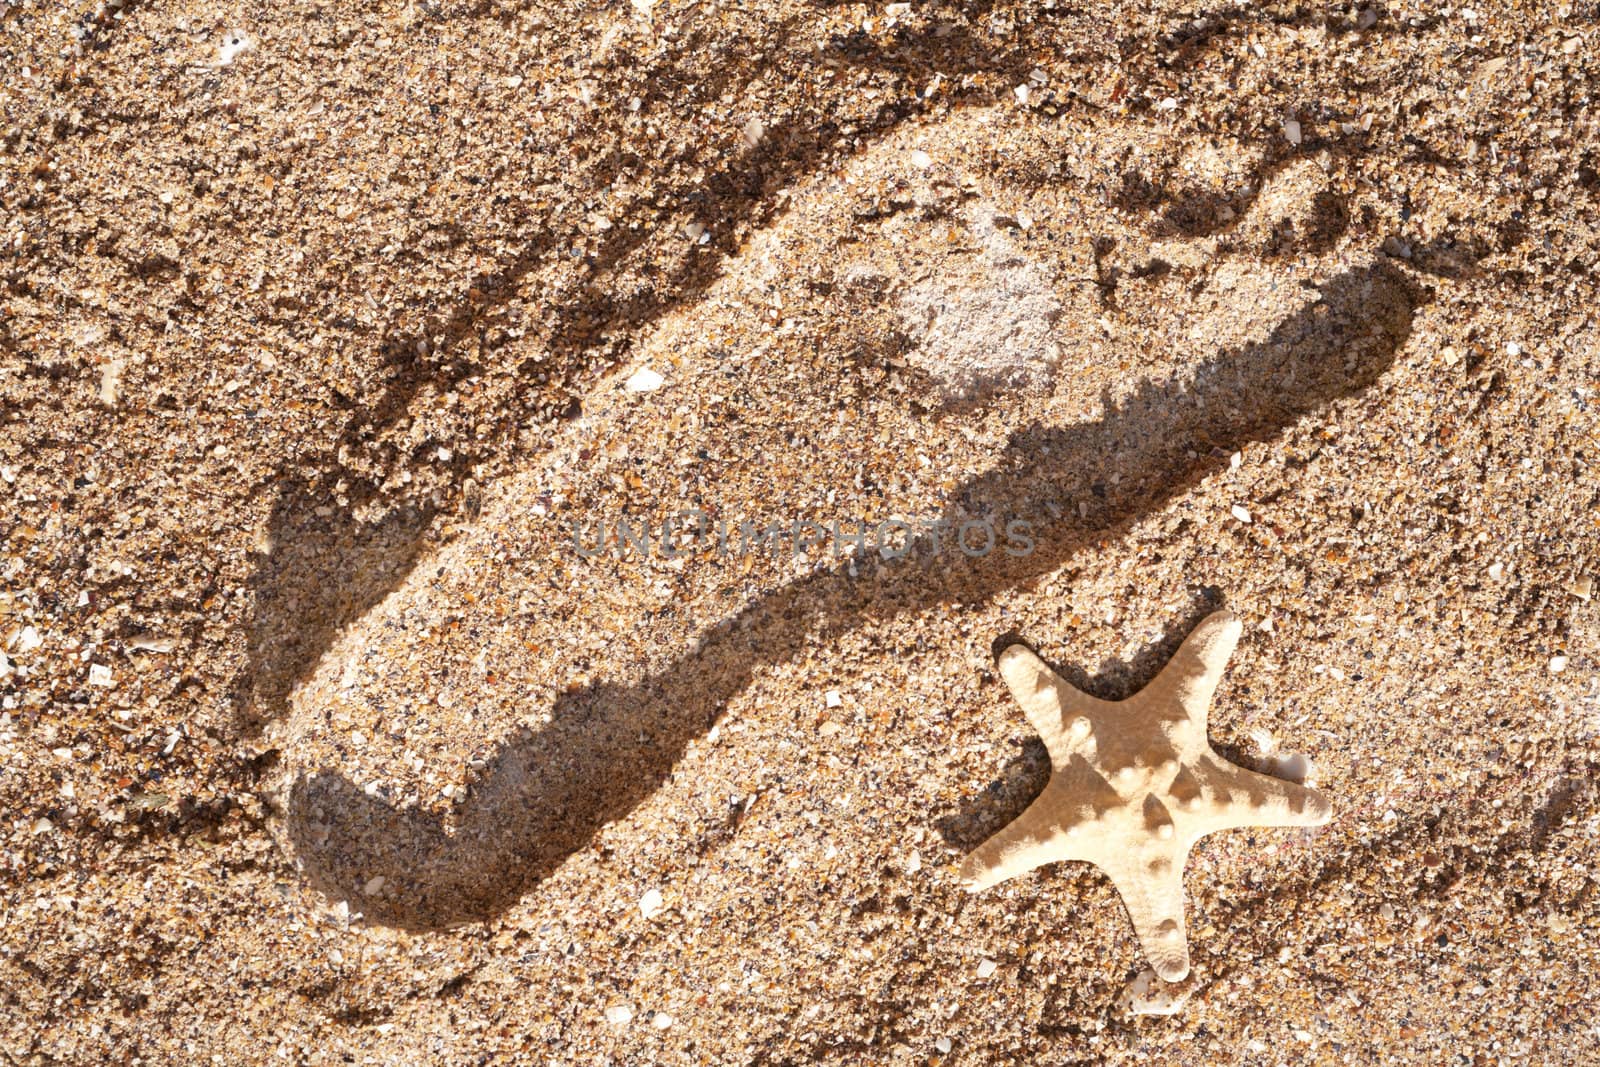 Human trace and starfish on sea sand. Beach